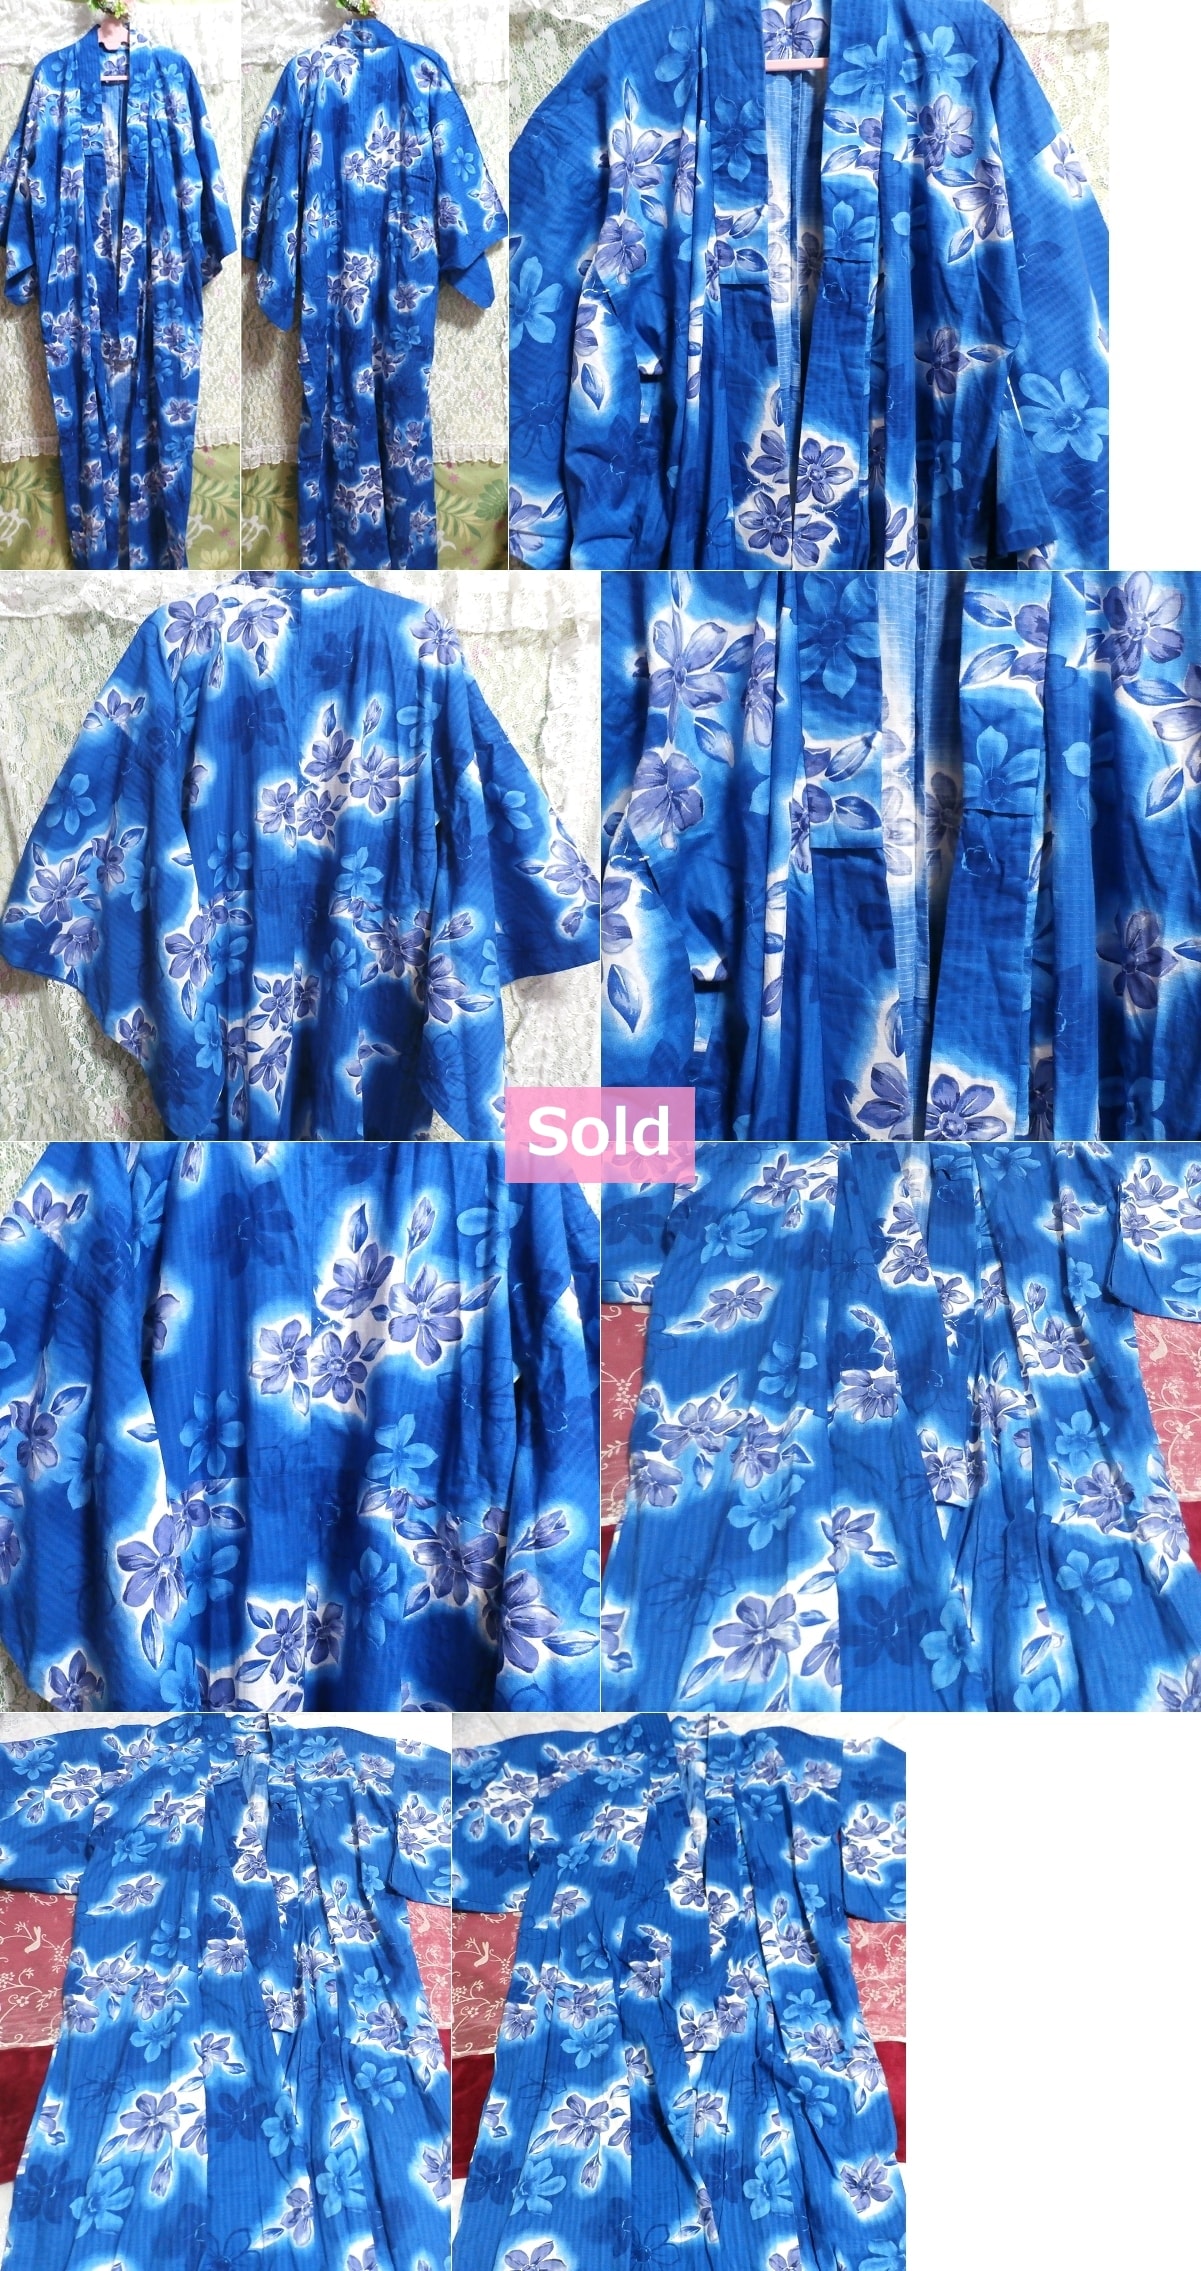 青の夜光花柄浴衣/和服/着物 Blue nightlight flower pattern yukata/Japanese clothes/kimono, 浴衣, 浴衣(単体), その他